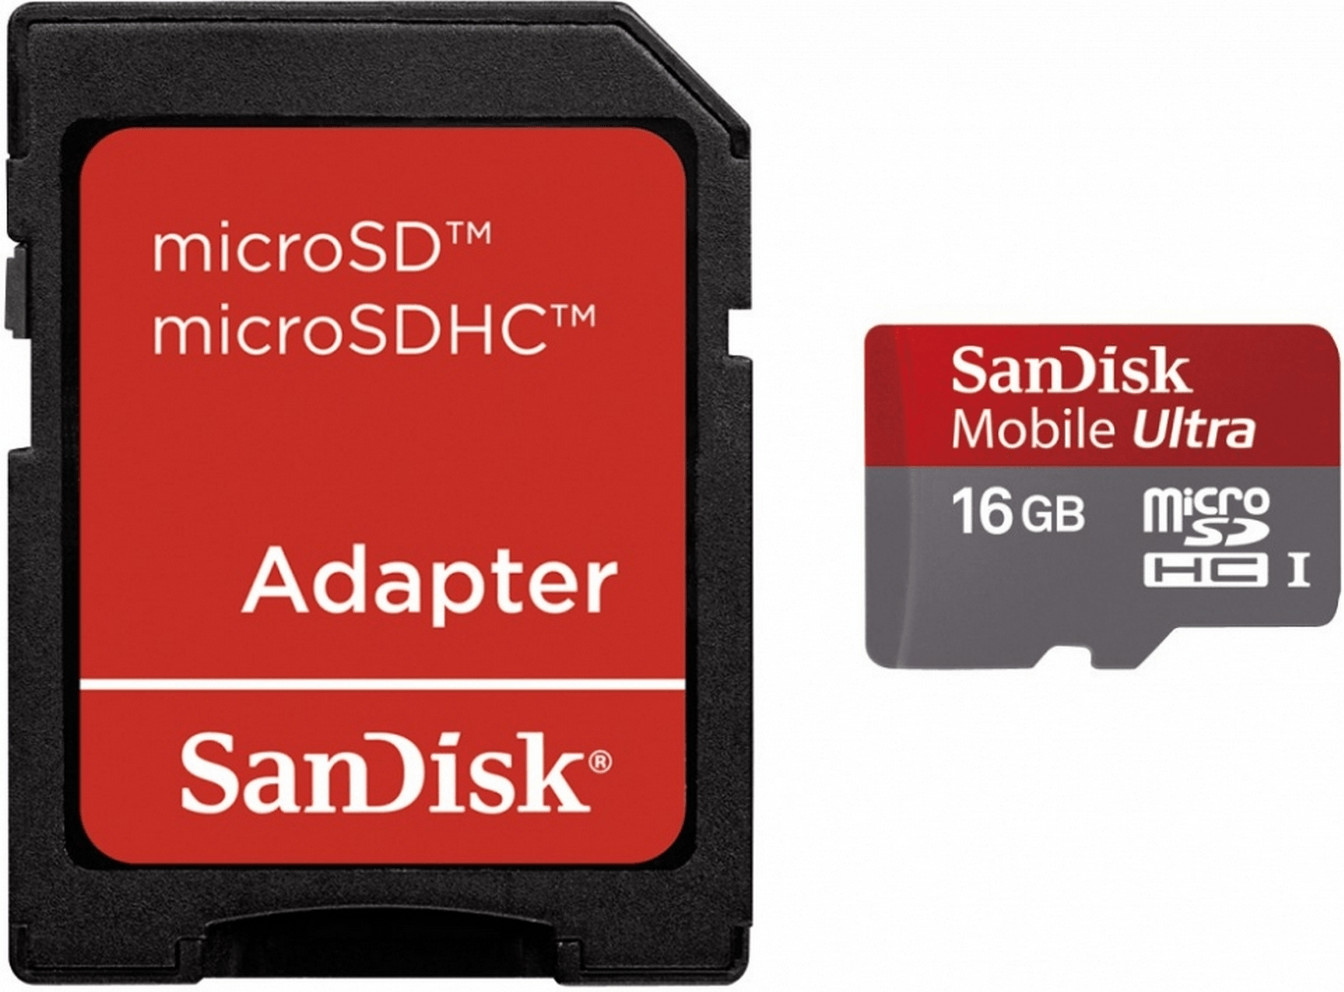 SanDisk Mobile Ultra microSDHC 16GB Class 10 UHS-I (SDSDQU-016G)